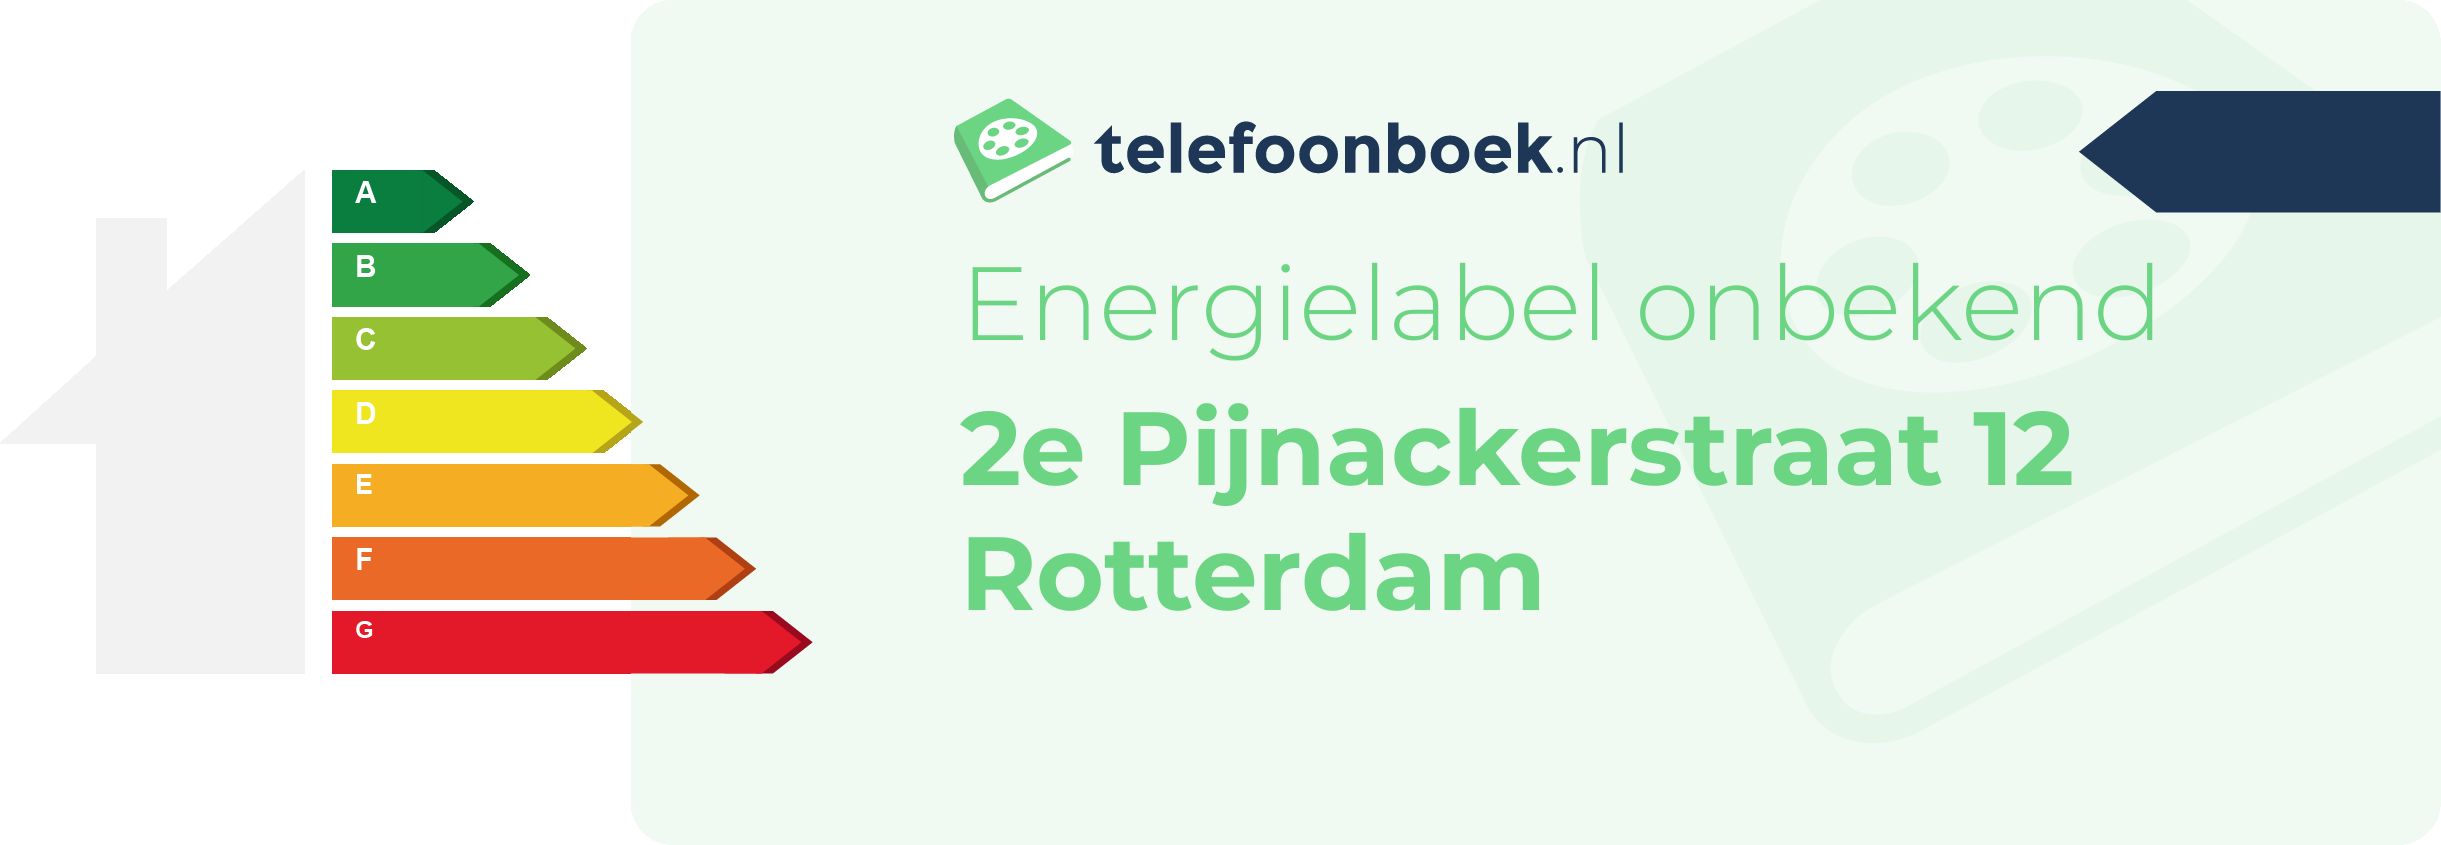 Energielabel 2e Pijnackerstraat 12 Rotterdam